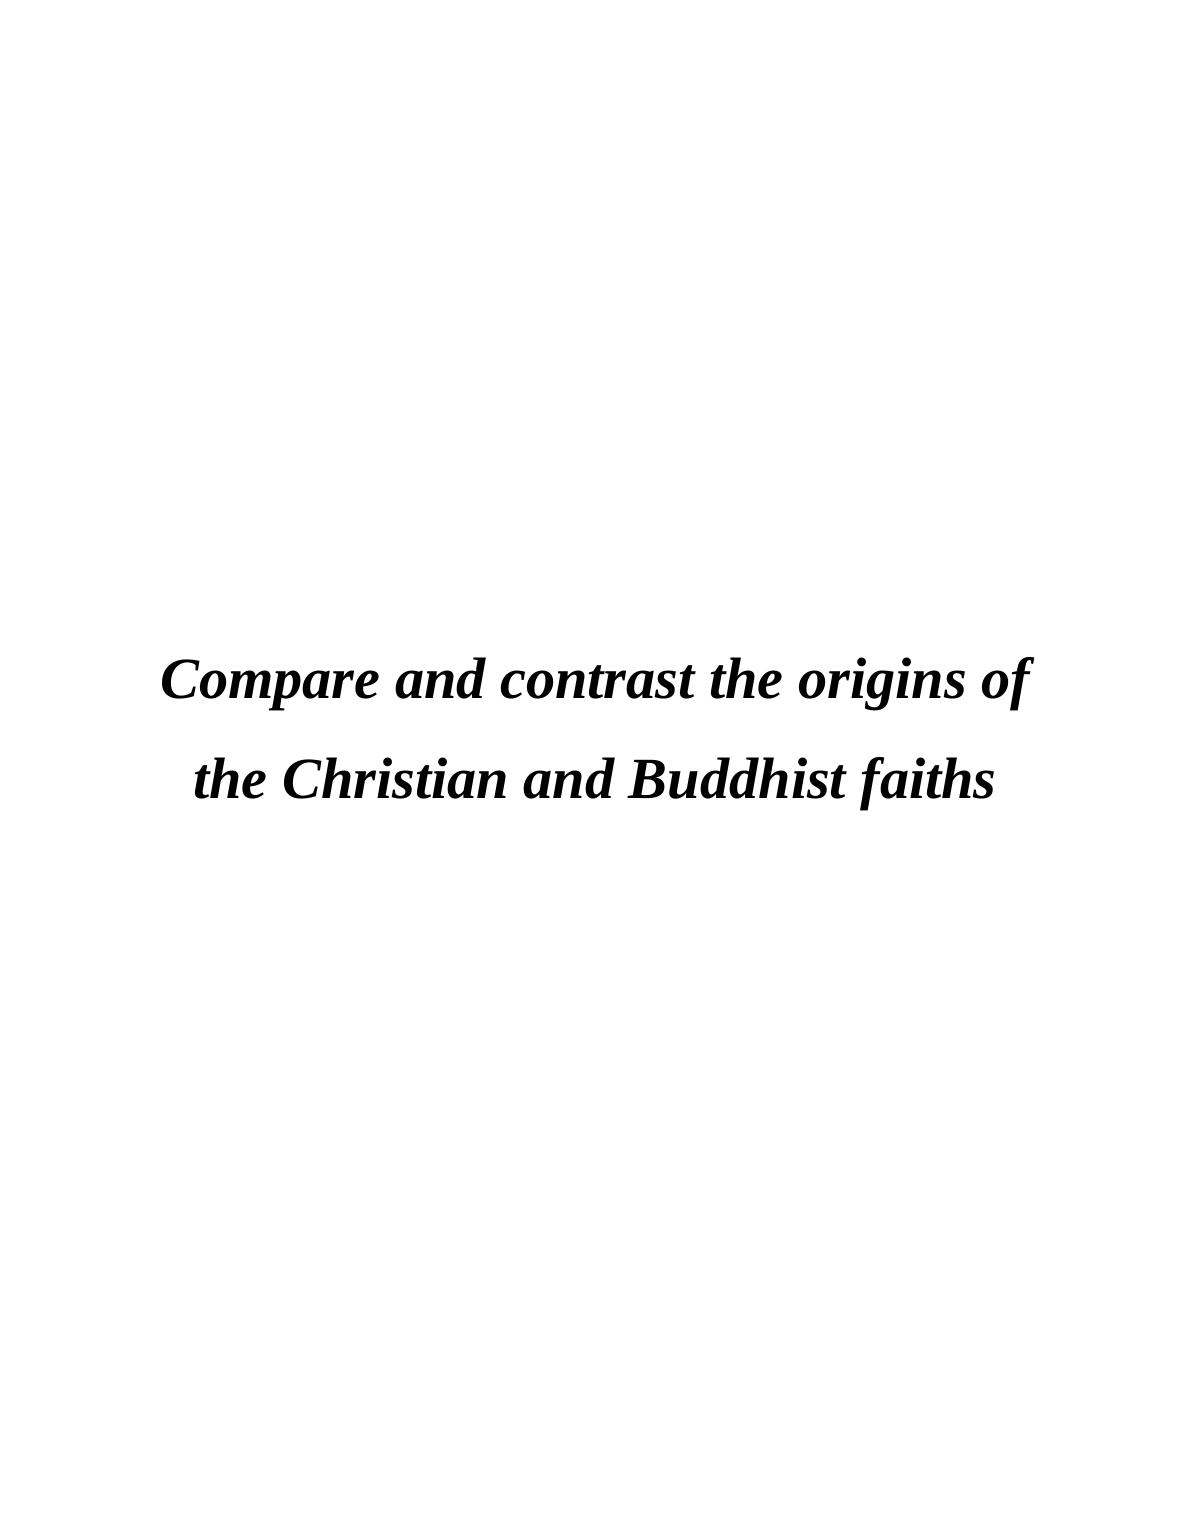 Origins of Christian and Buddhist Faiths_1